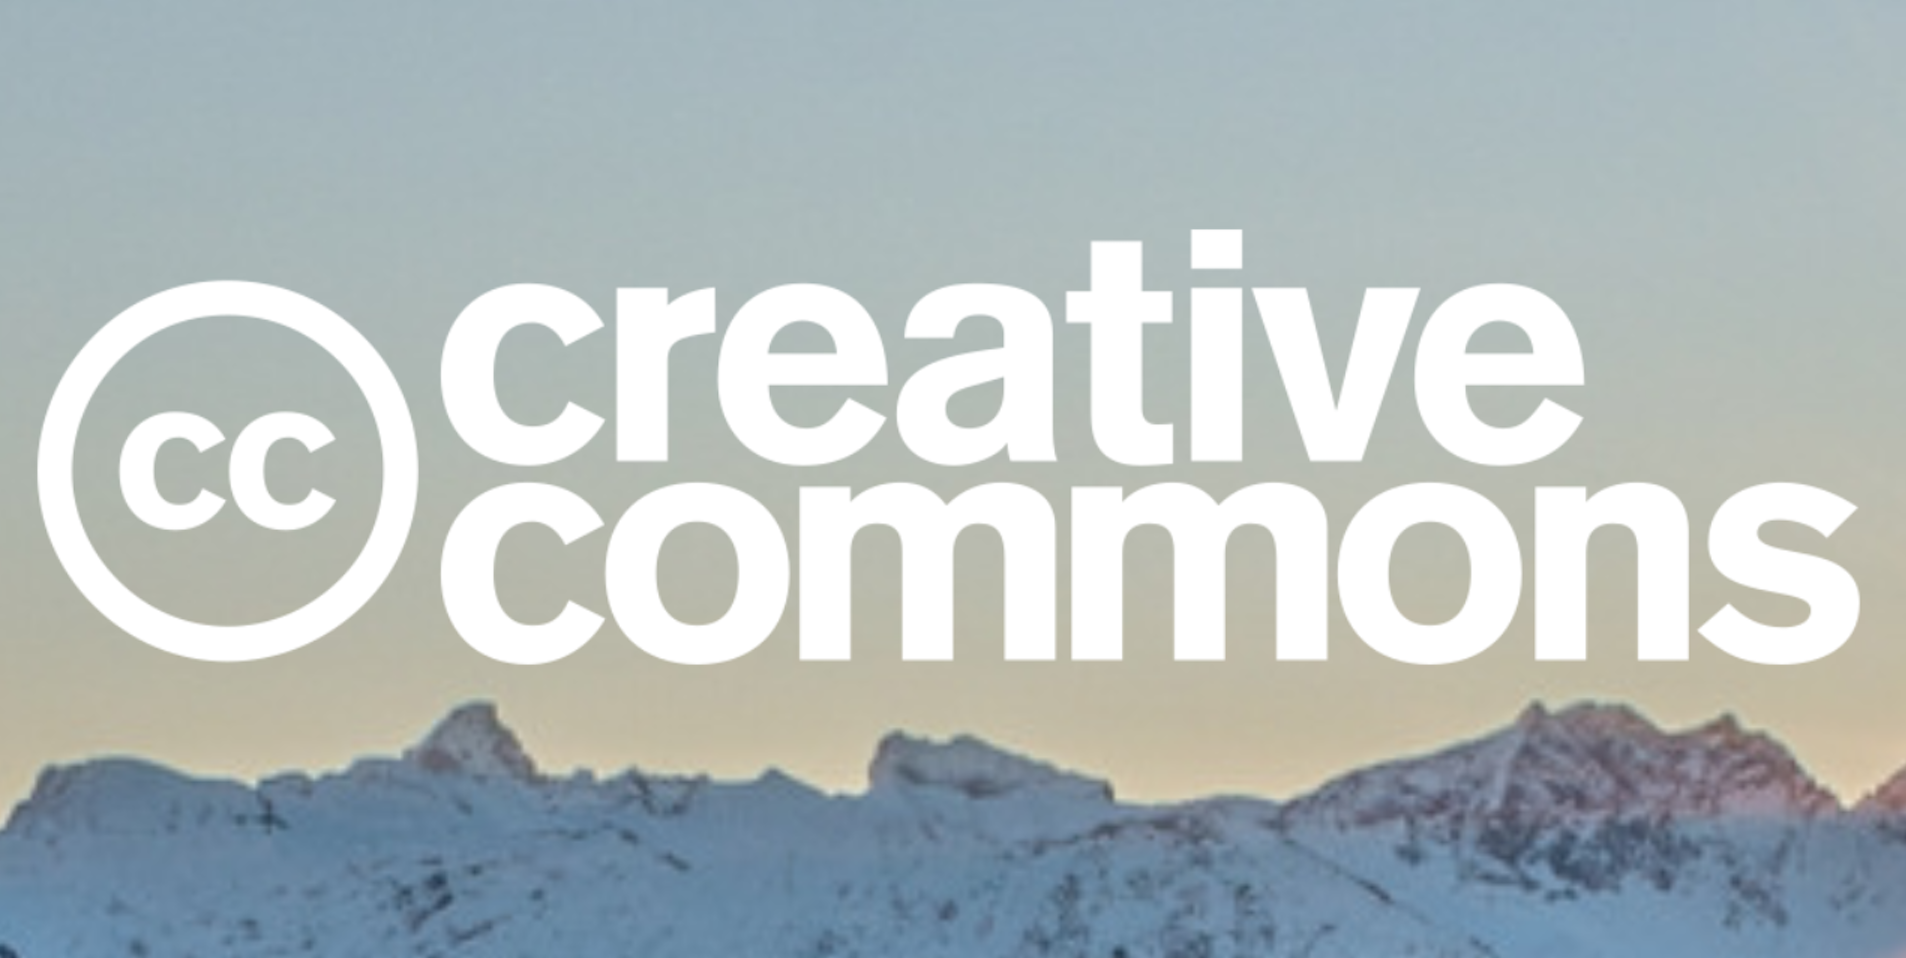 Creative commons сайты. Картинки креатив Коммонс. Россия фотографии Creative Commons. Common картинка.